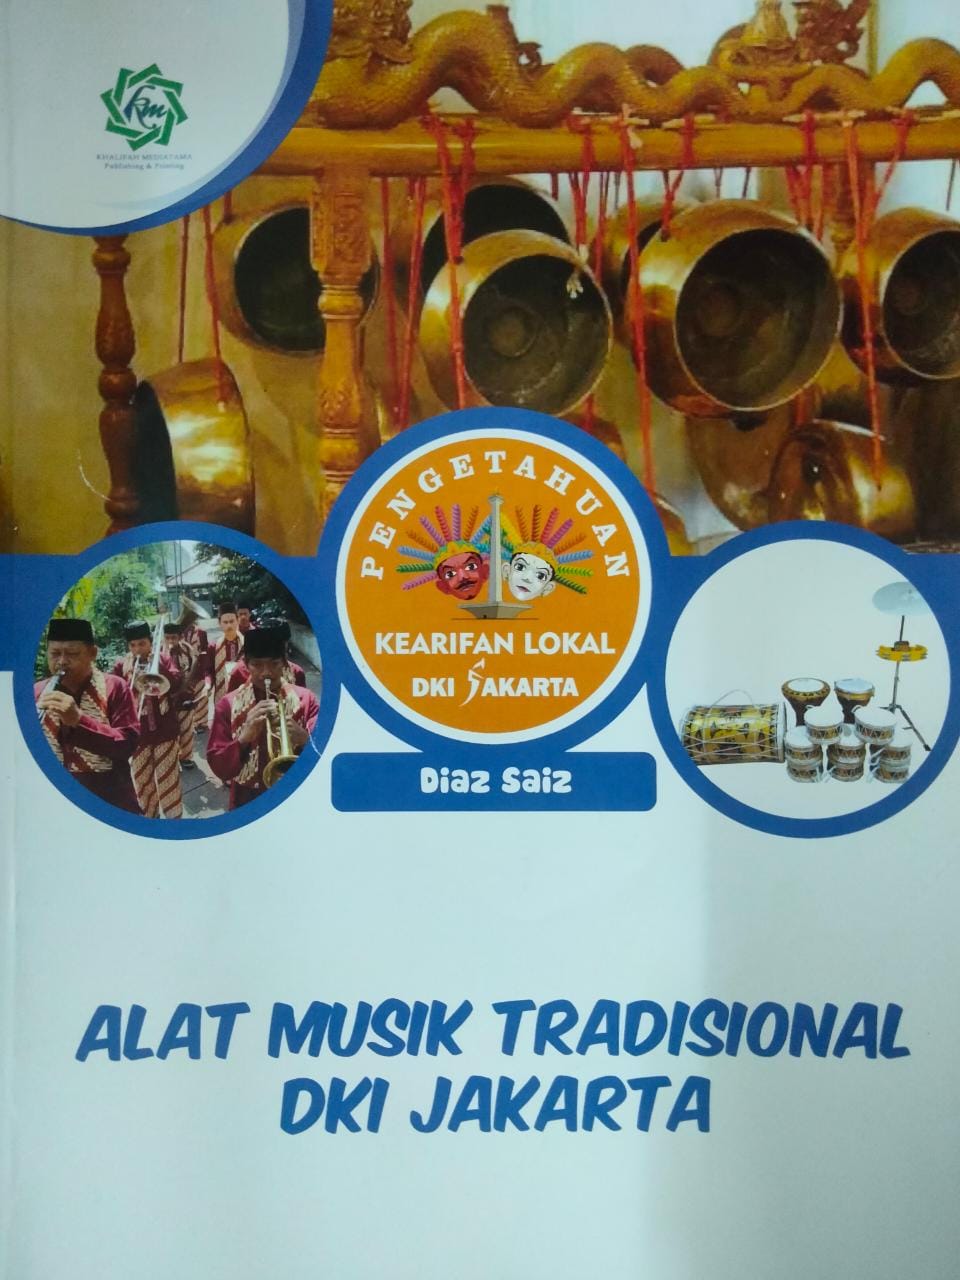 Alat Musik Tradisional DKI Jakarta